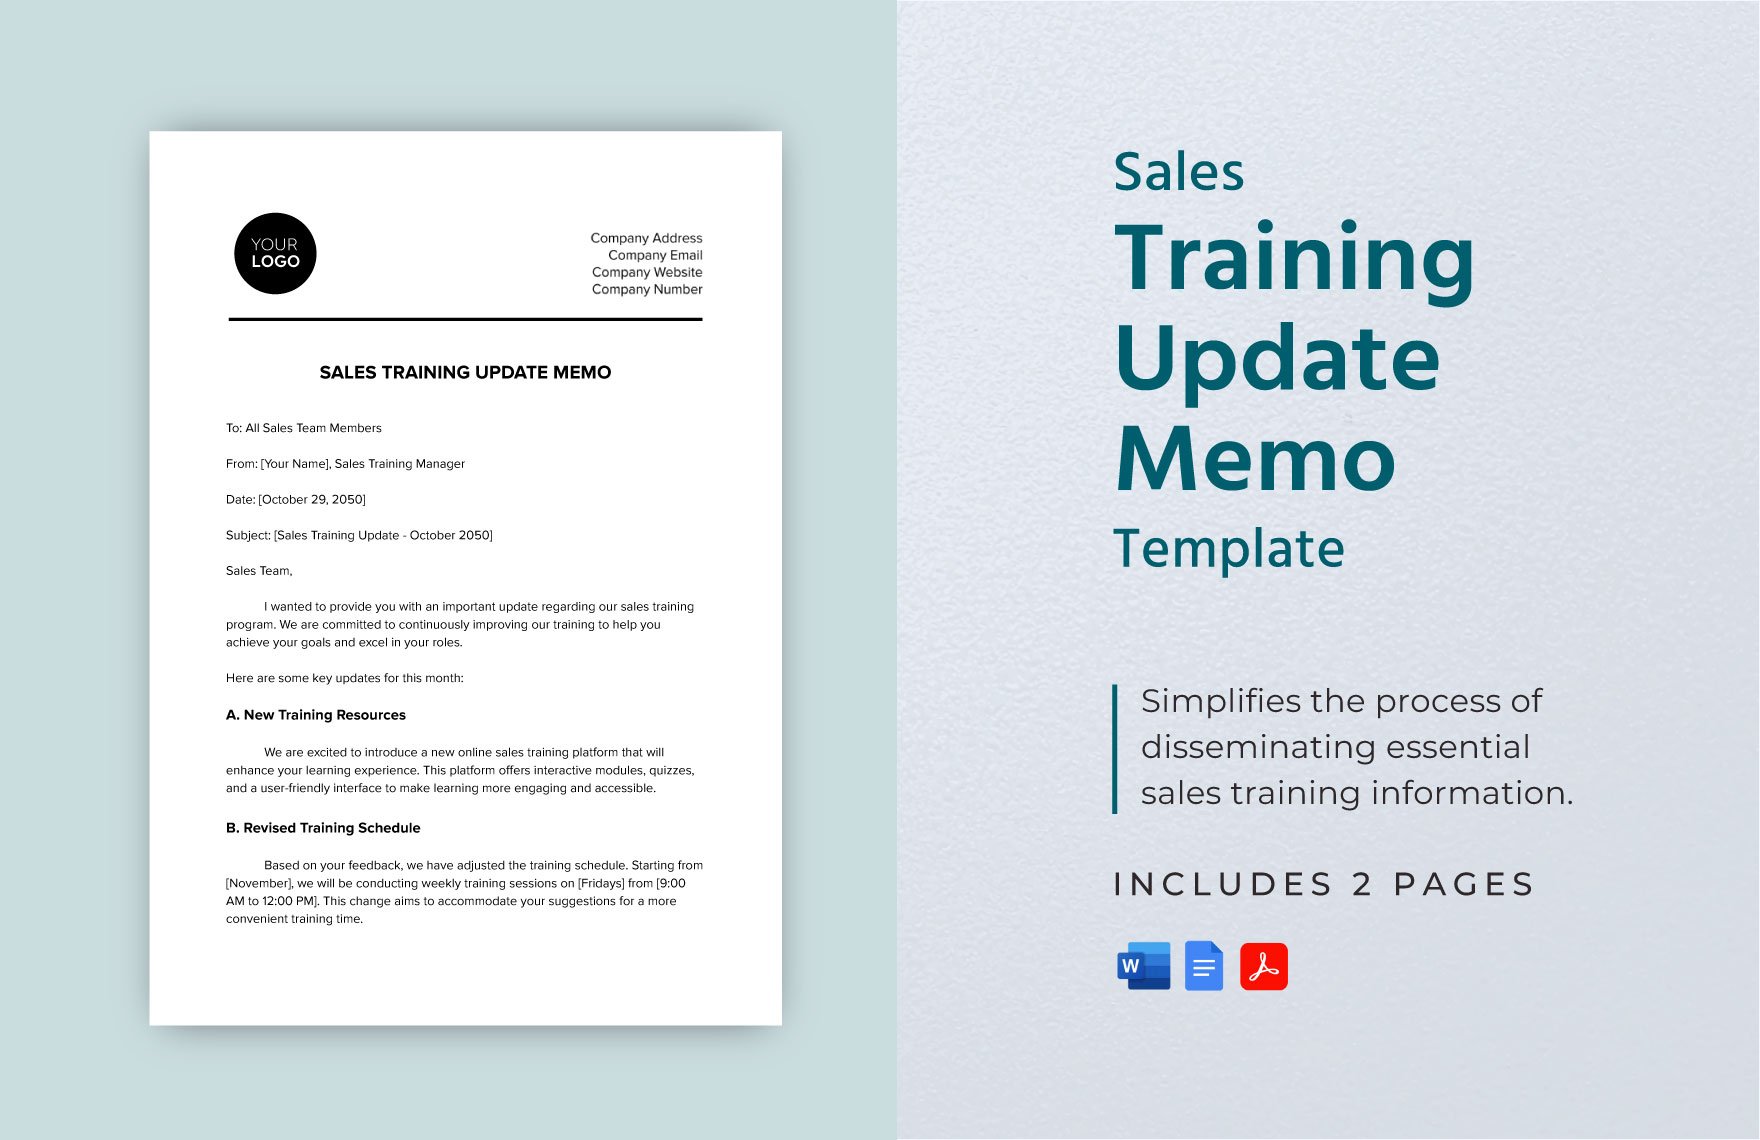 Sales Training Update Memo Template